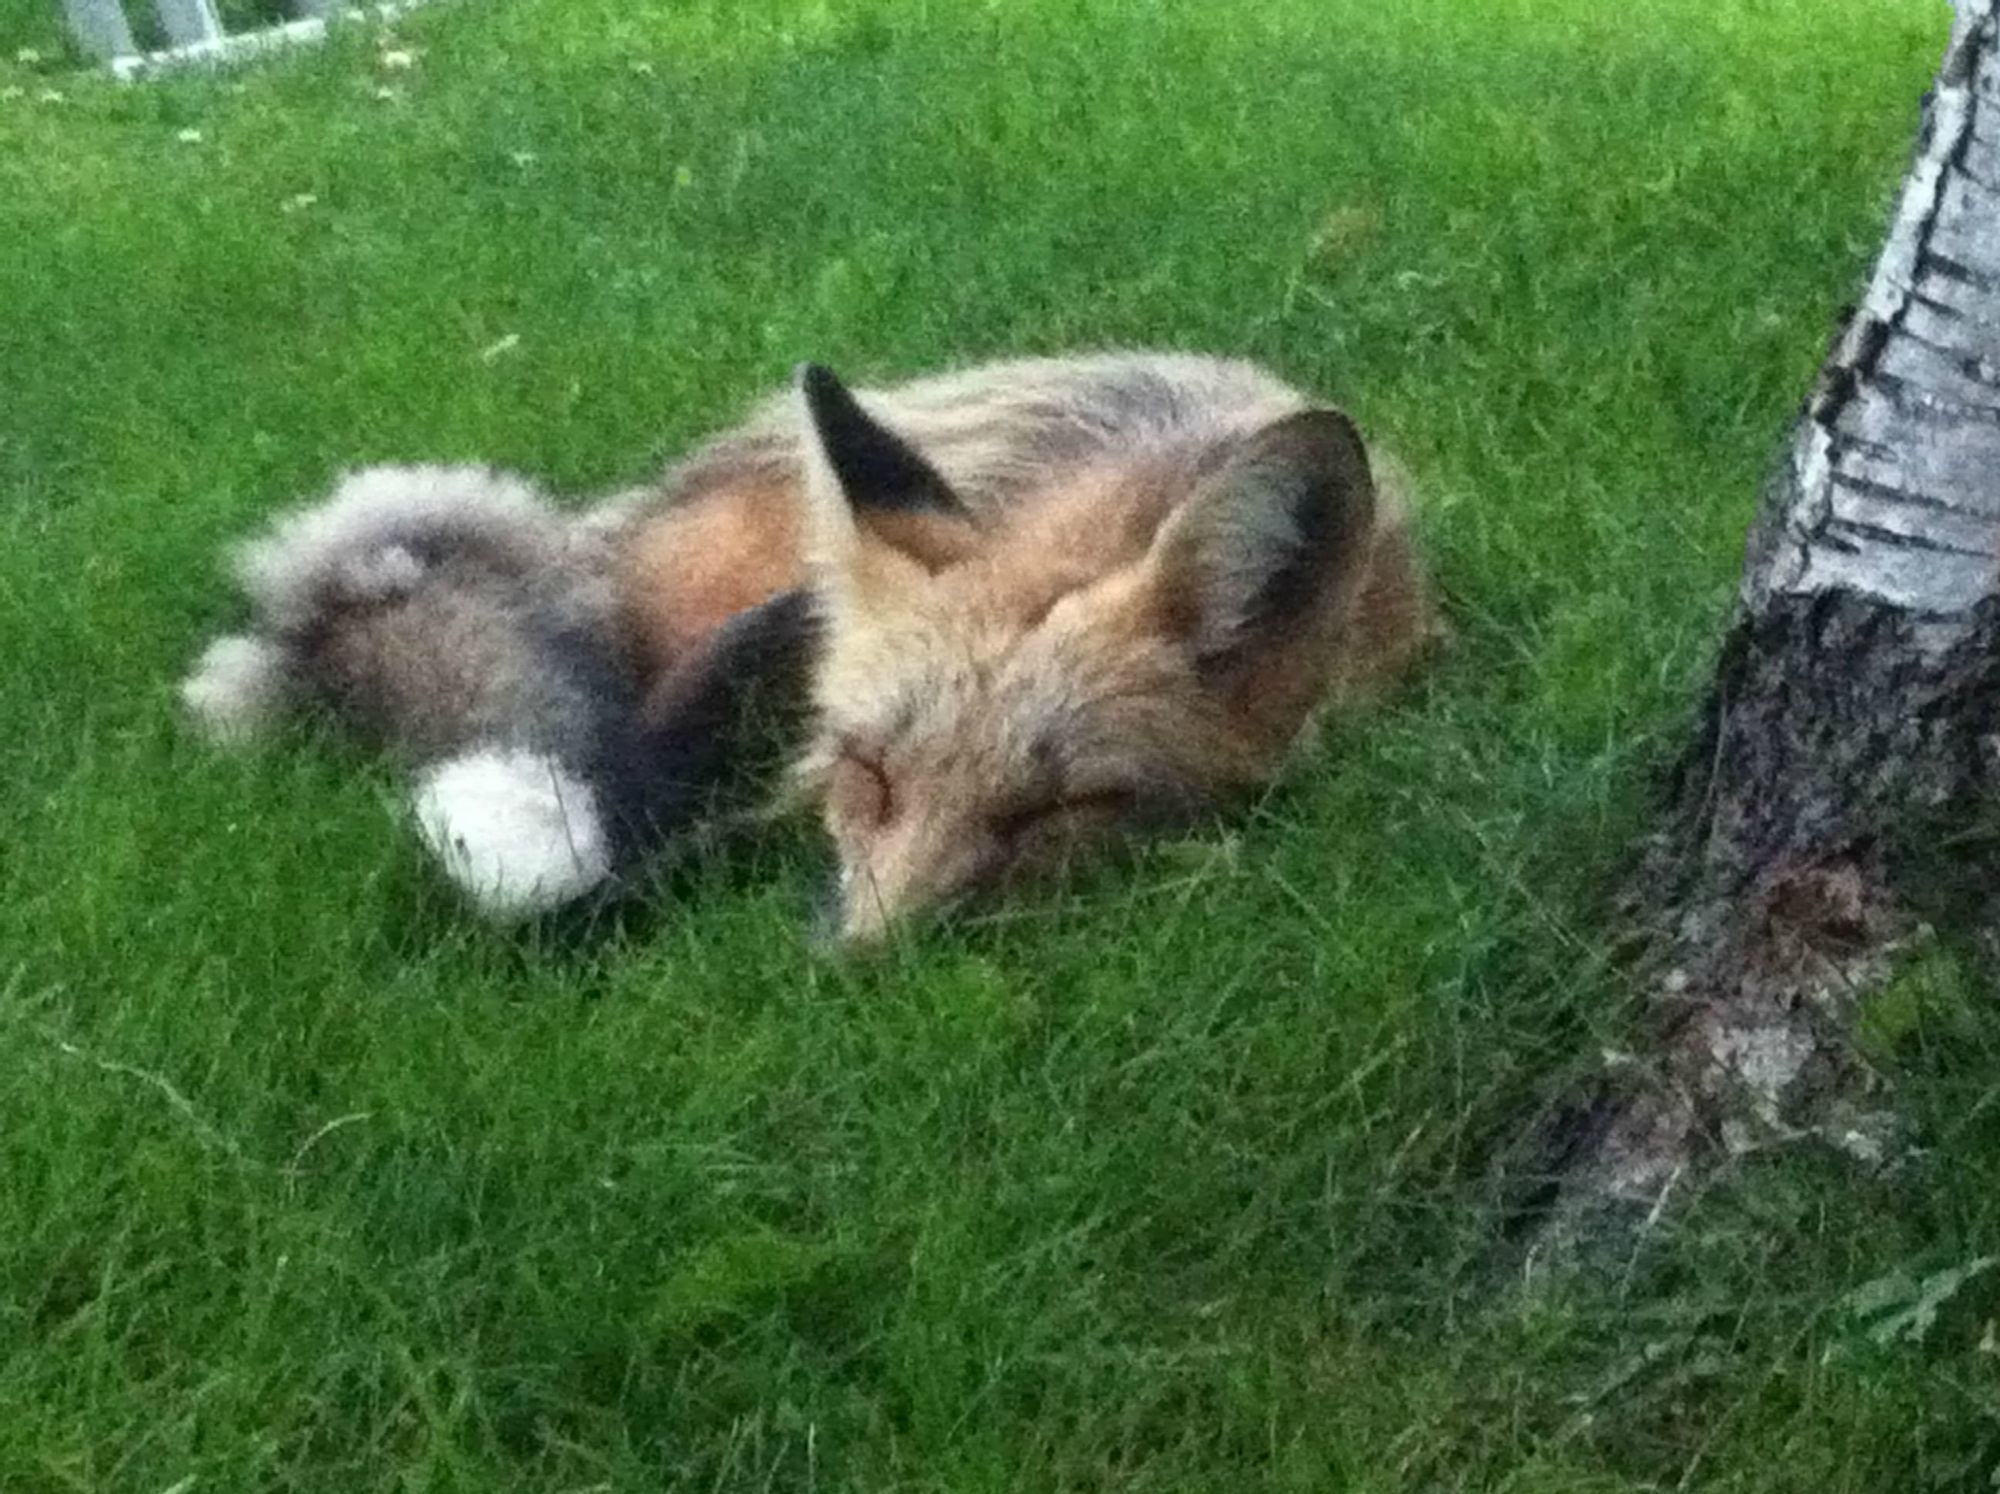 A family found a fox taking a nap on their grass. 